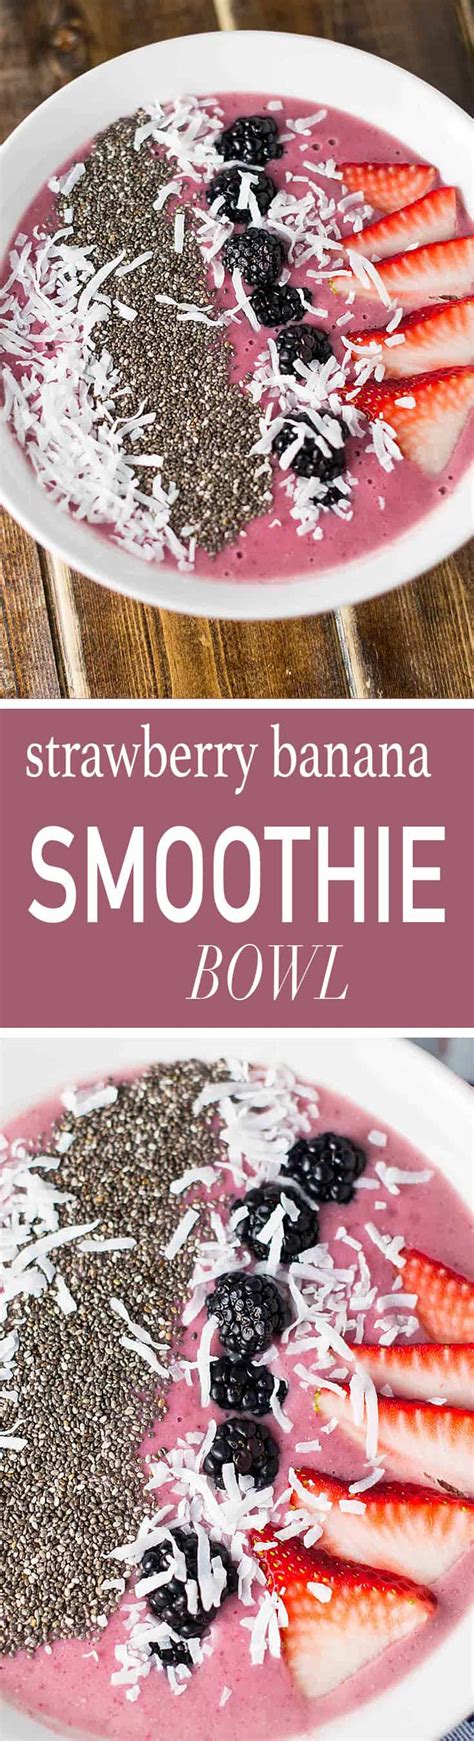 5 Minute Strawberry Banana Smoothie Bowl Recipe Vegan Gluten Free